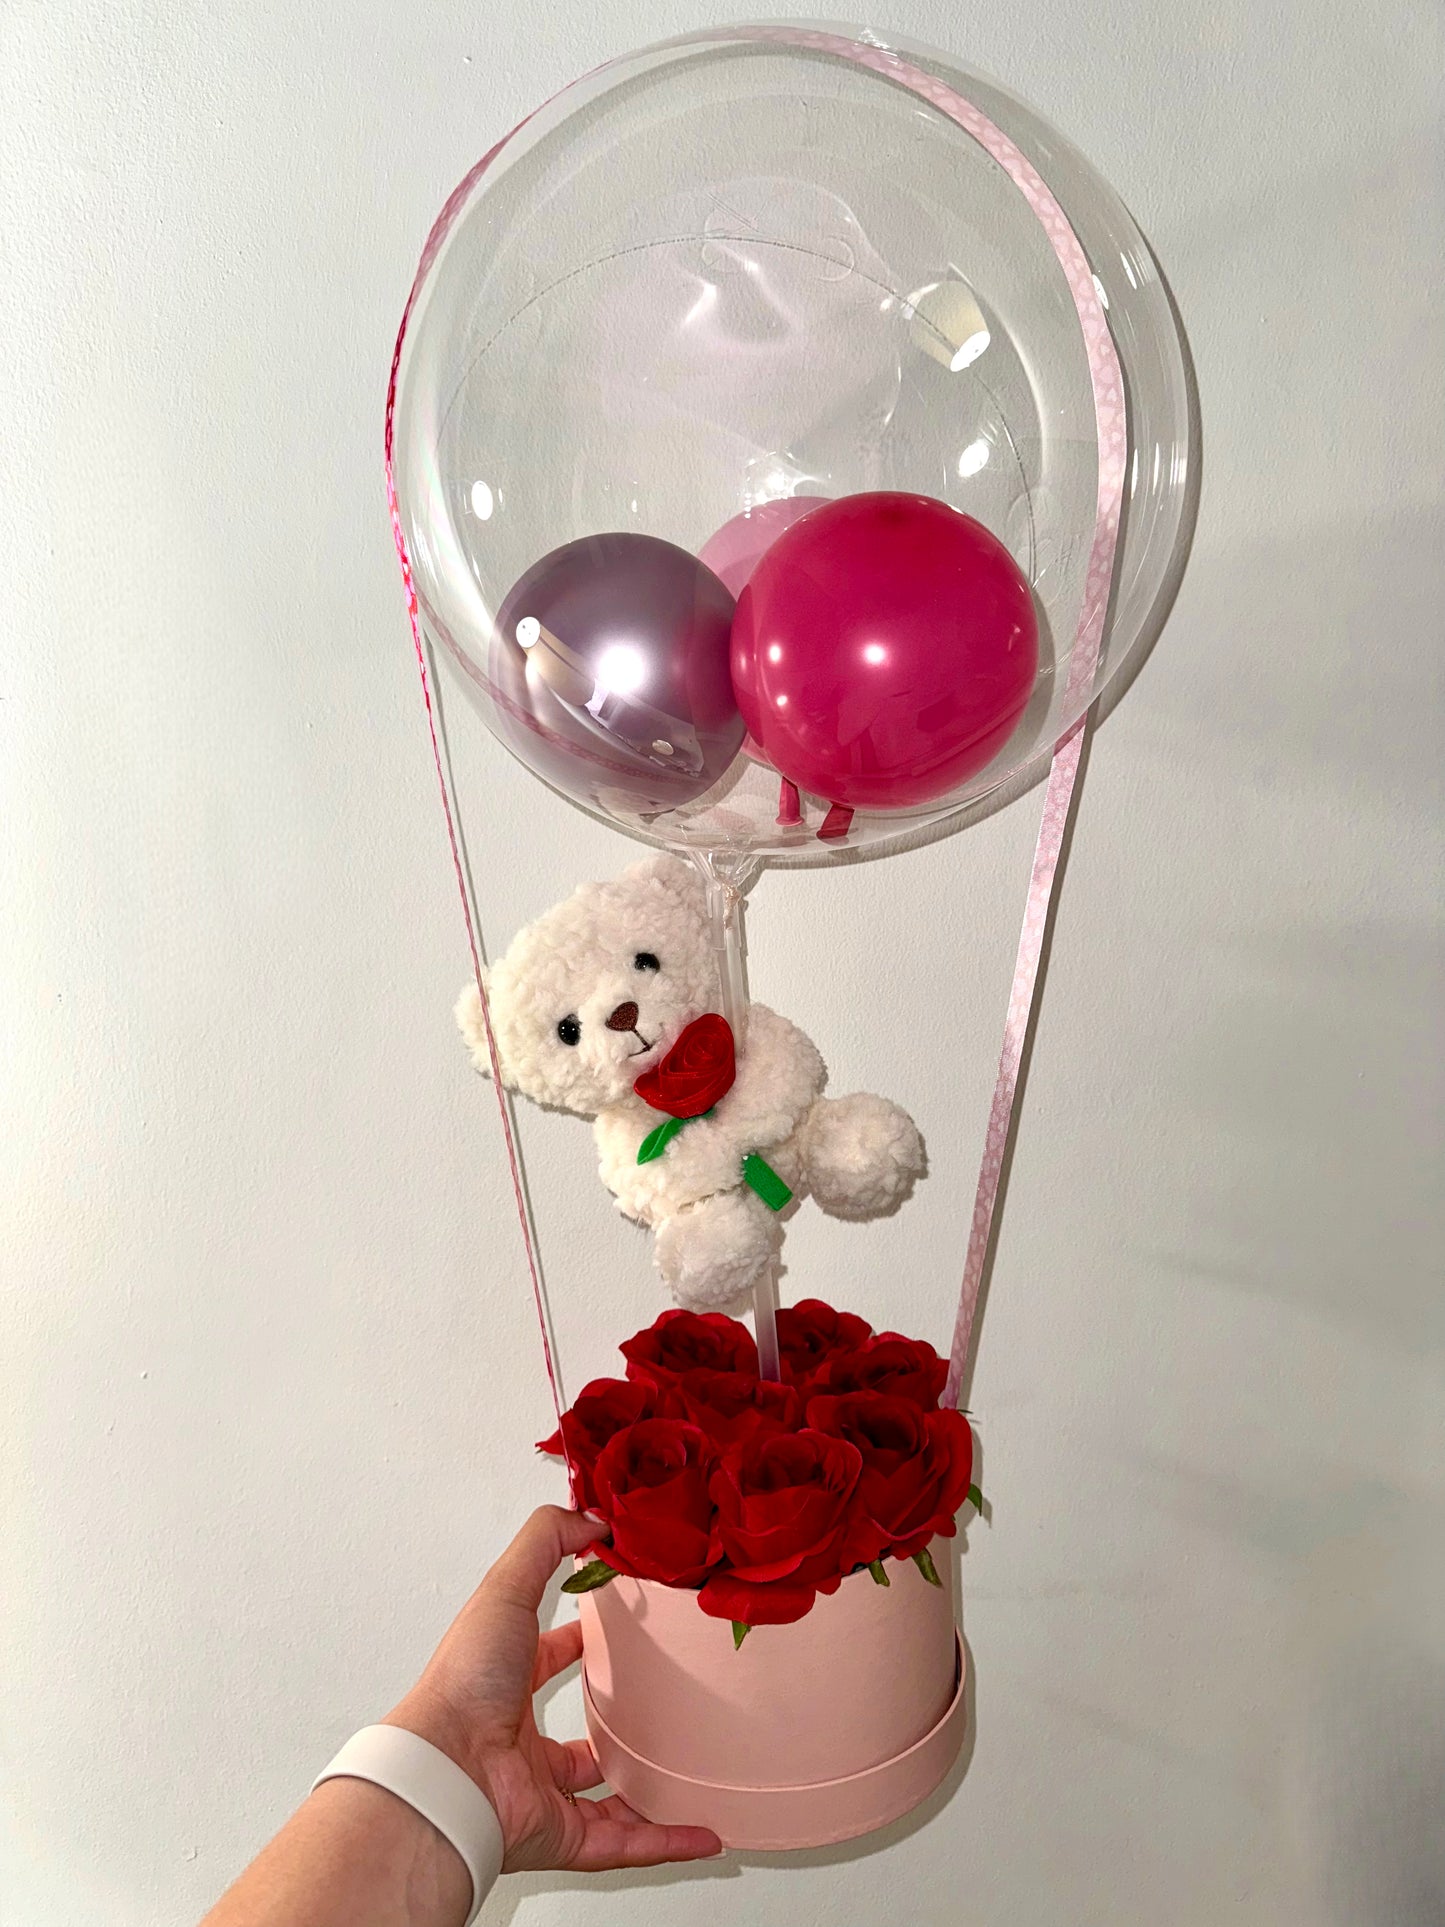 Balloon Arrangement With Teddy Bear